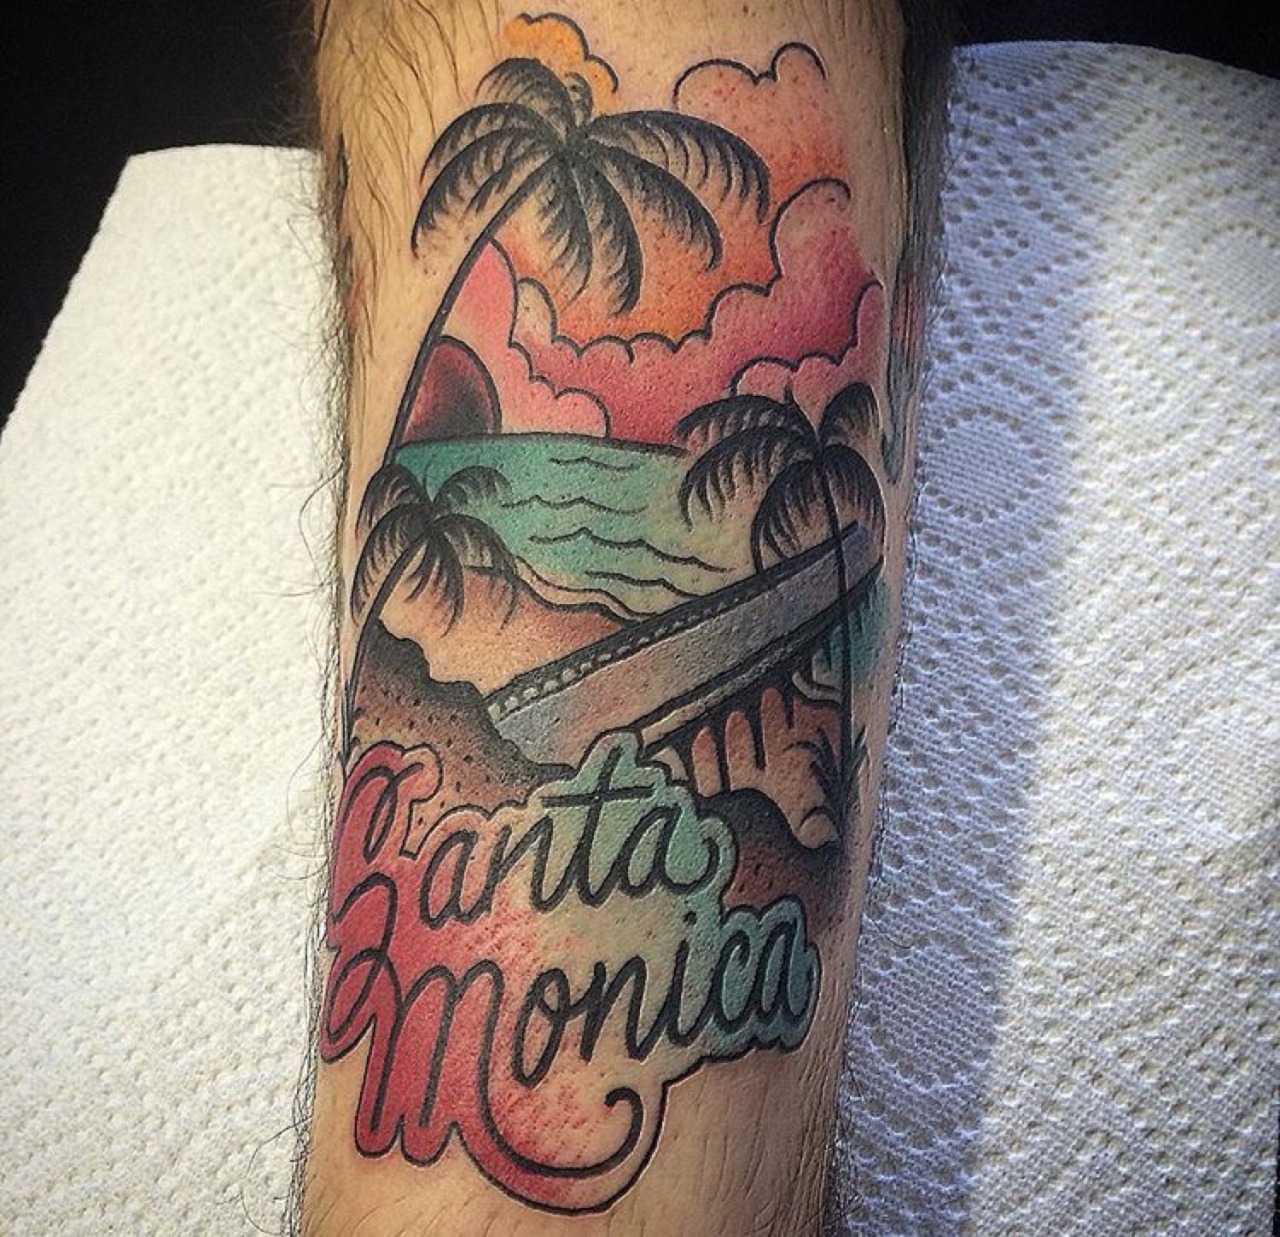 Troy Peace Santa Monica Tattoo.jpg